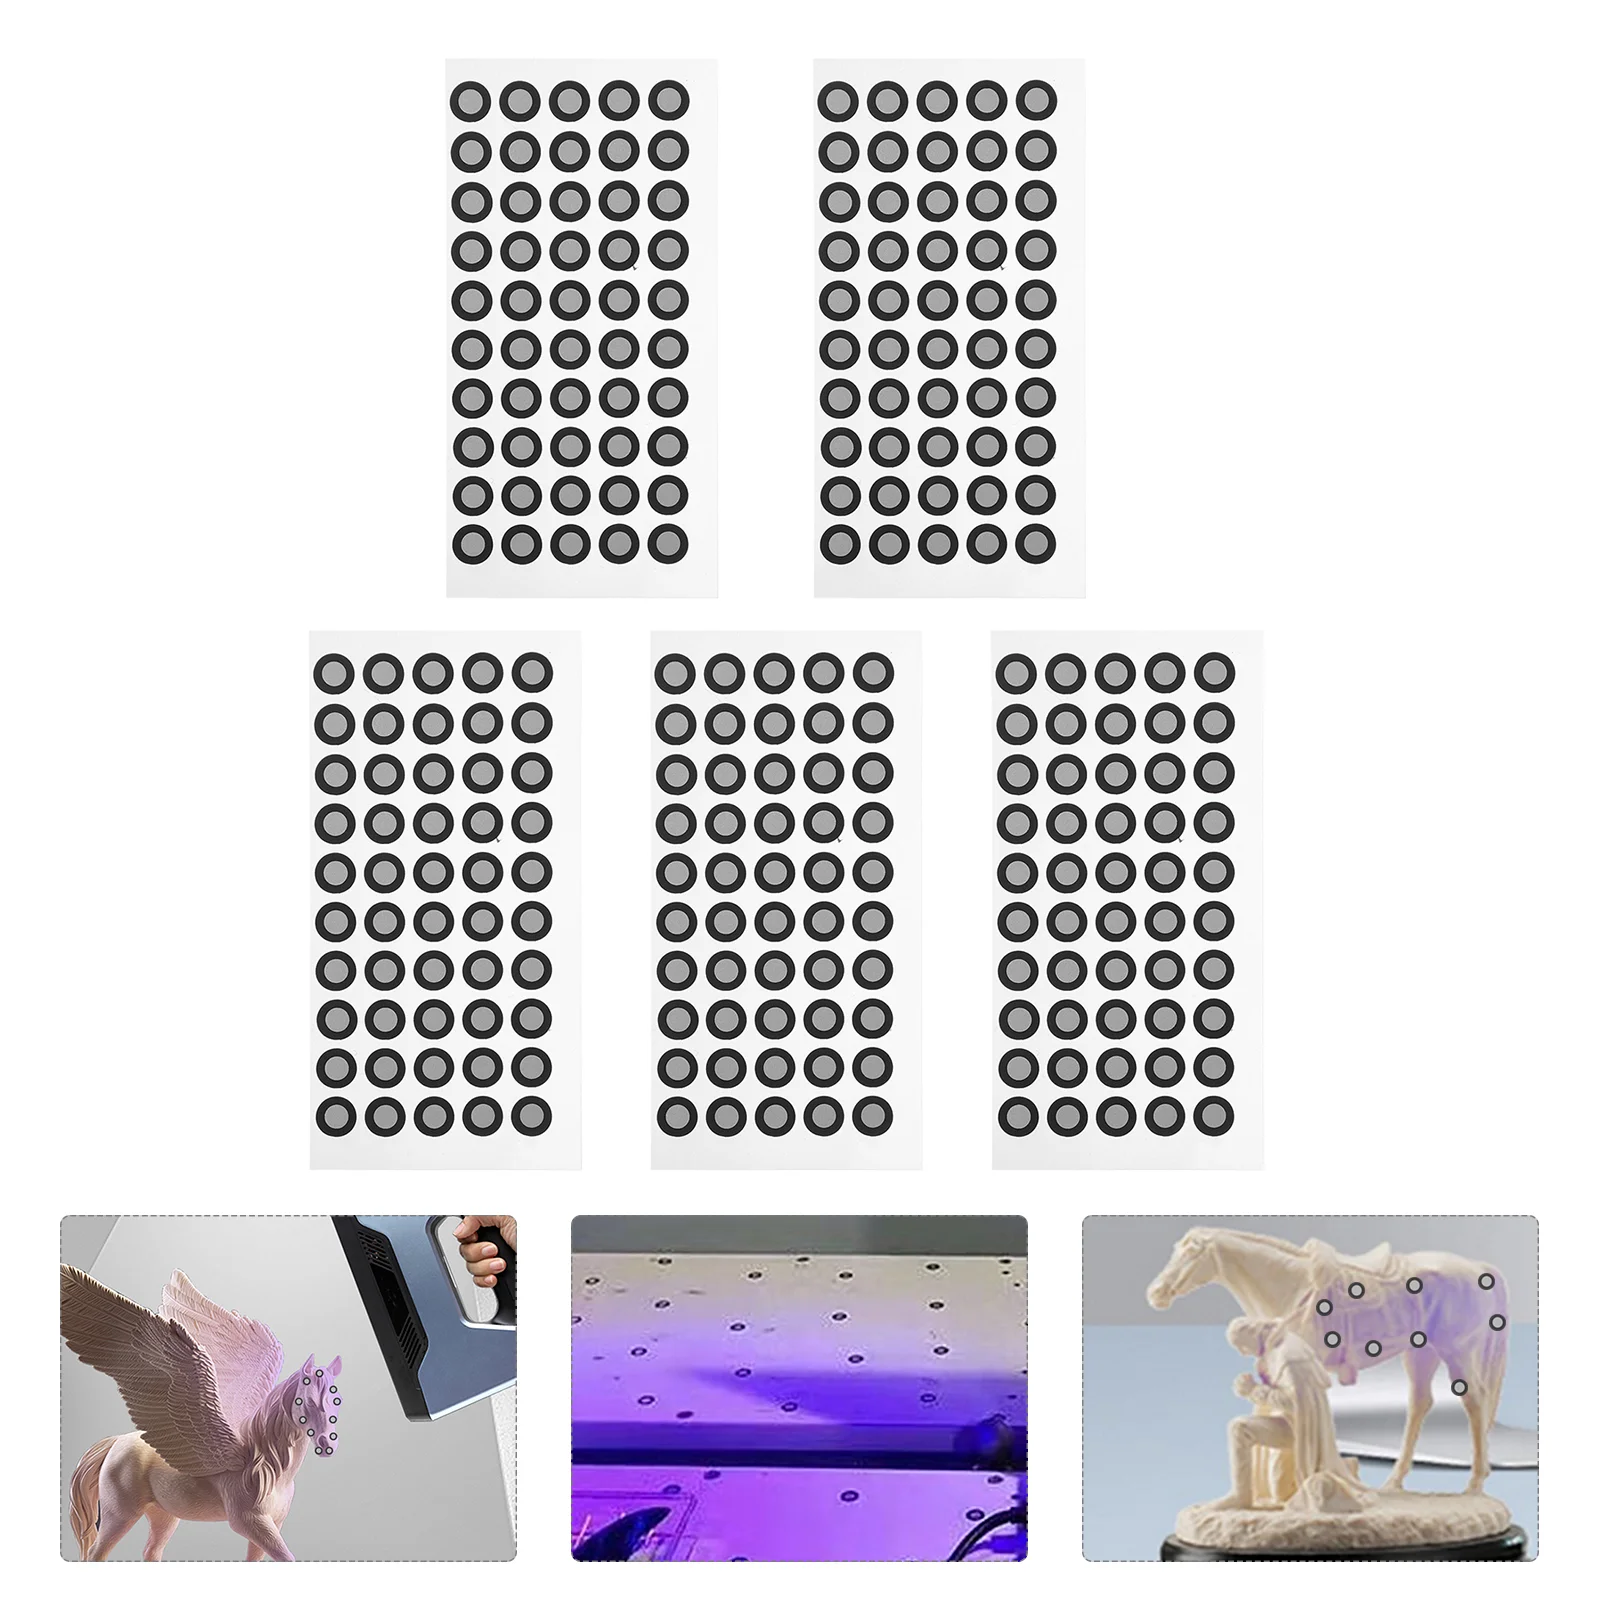 3D נקודת התייחסות סריקה סורק רעיוני סמן הסרט סמנים לציון השתקפות ספריי נקודות Dot סריקה בפני שחיקה - 0